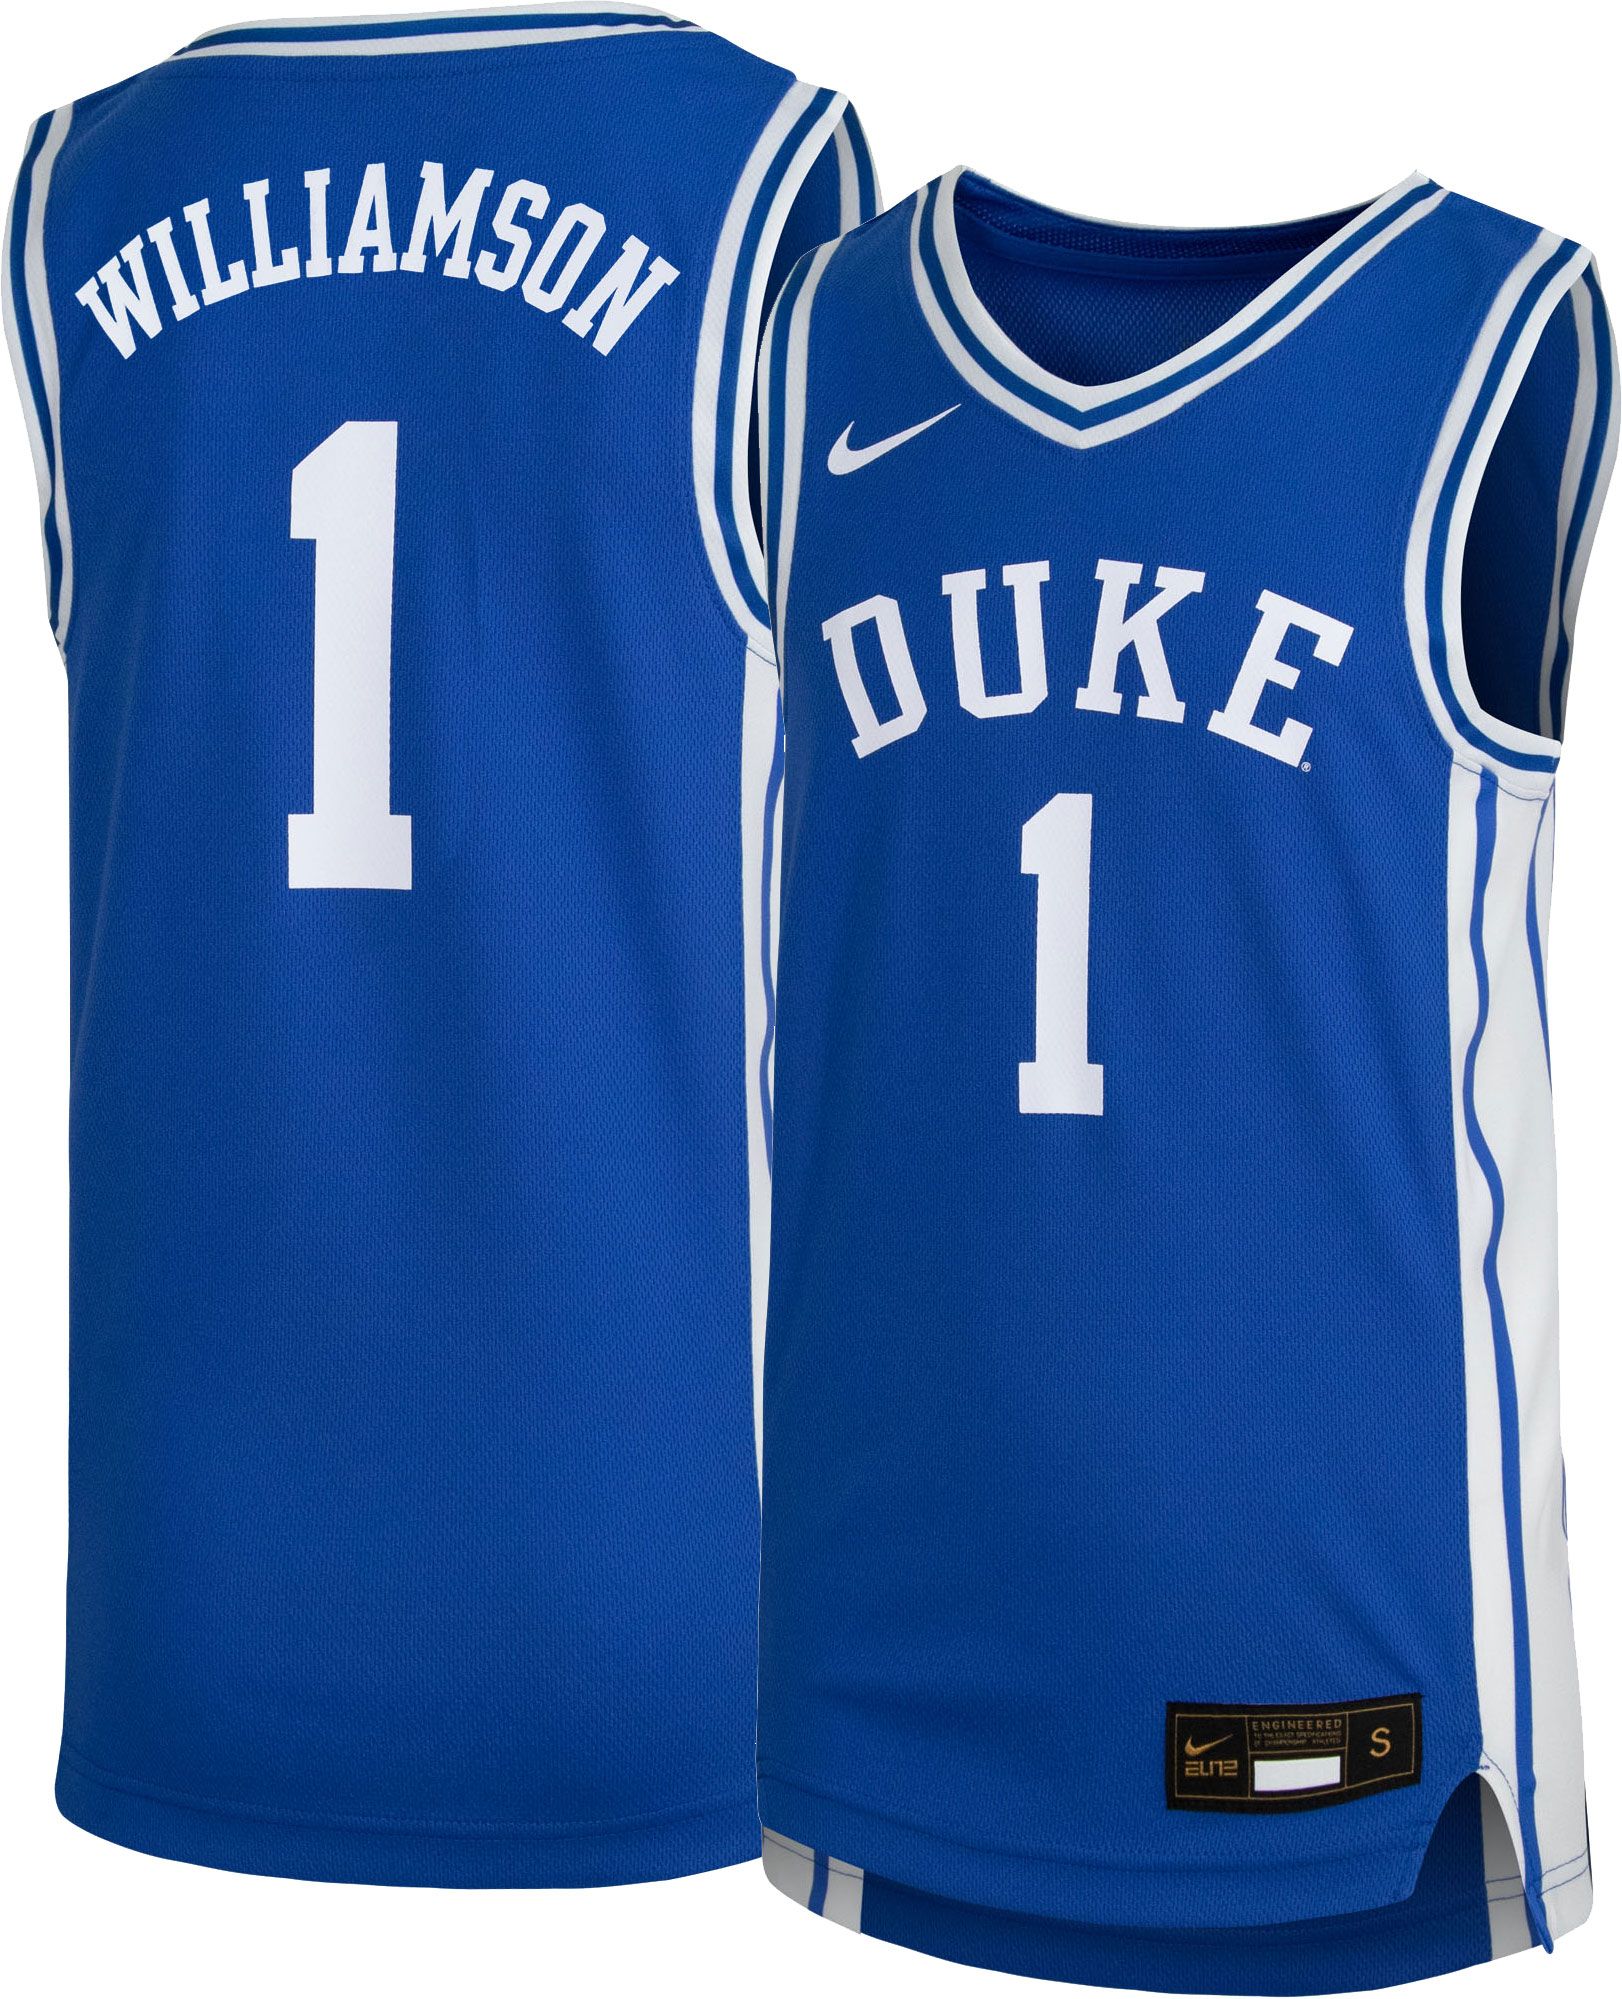 Nike Youth Zion Williamson Duke Blue 